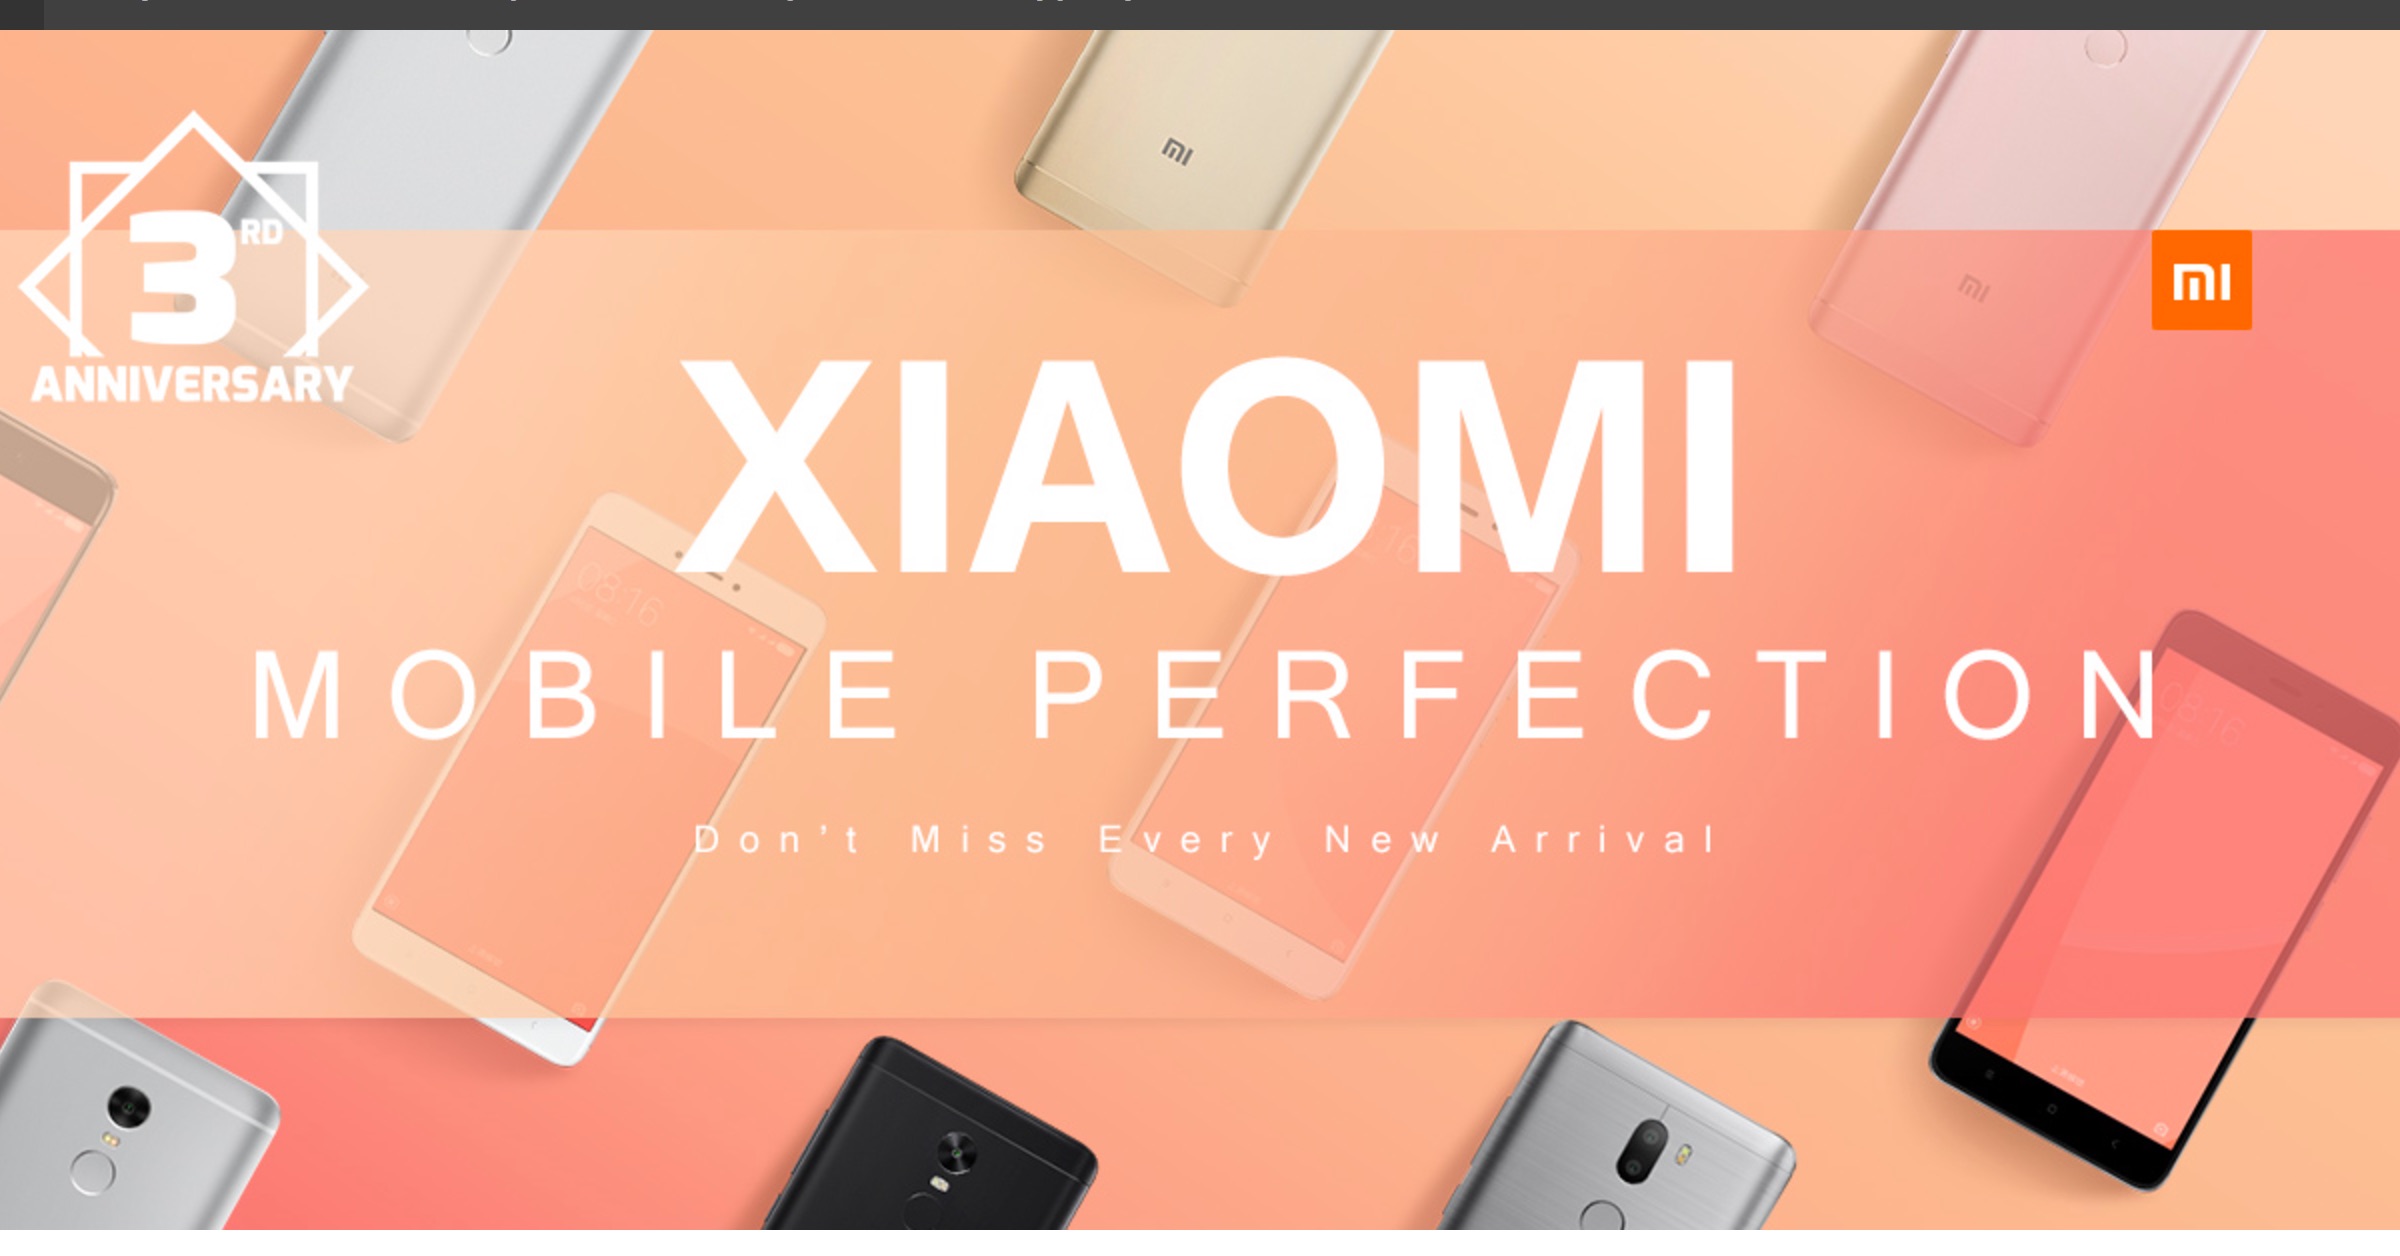 Smartfony xiaomi ru. Дистрибьютор Xiaomi. Xiaomi Promo. Реклама mi. Xiaomi sale banner.